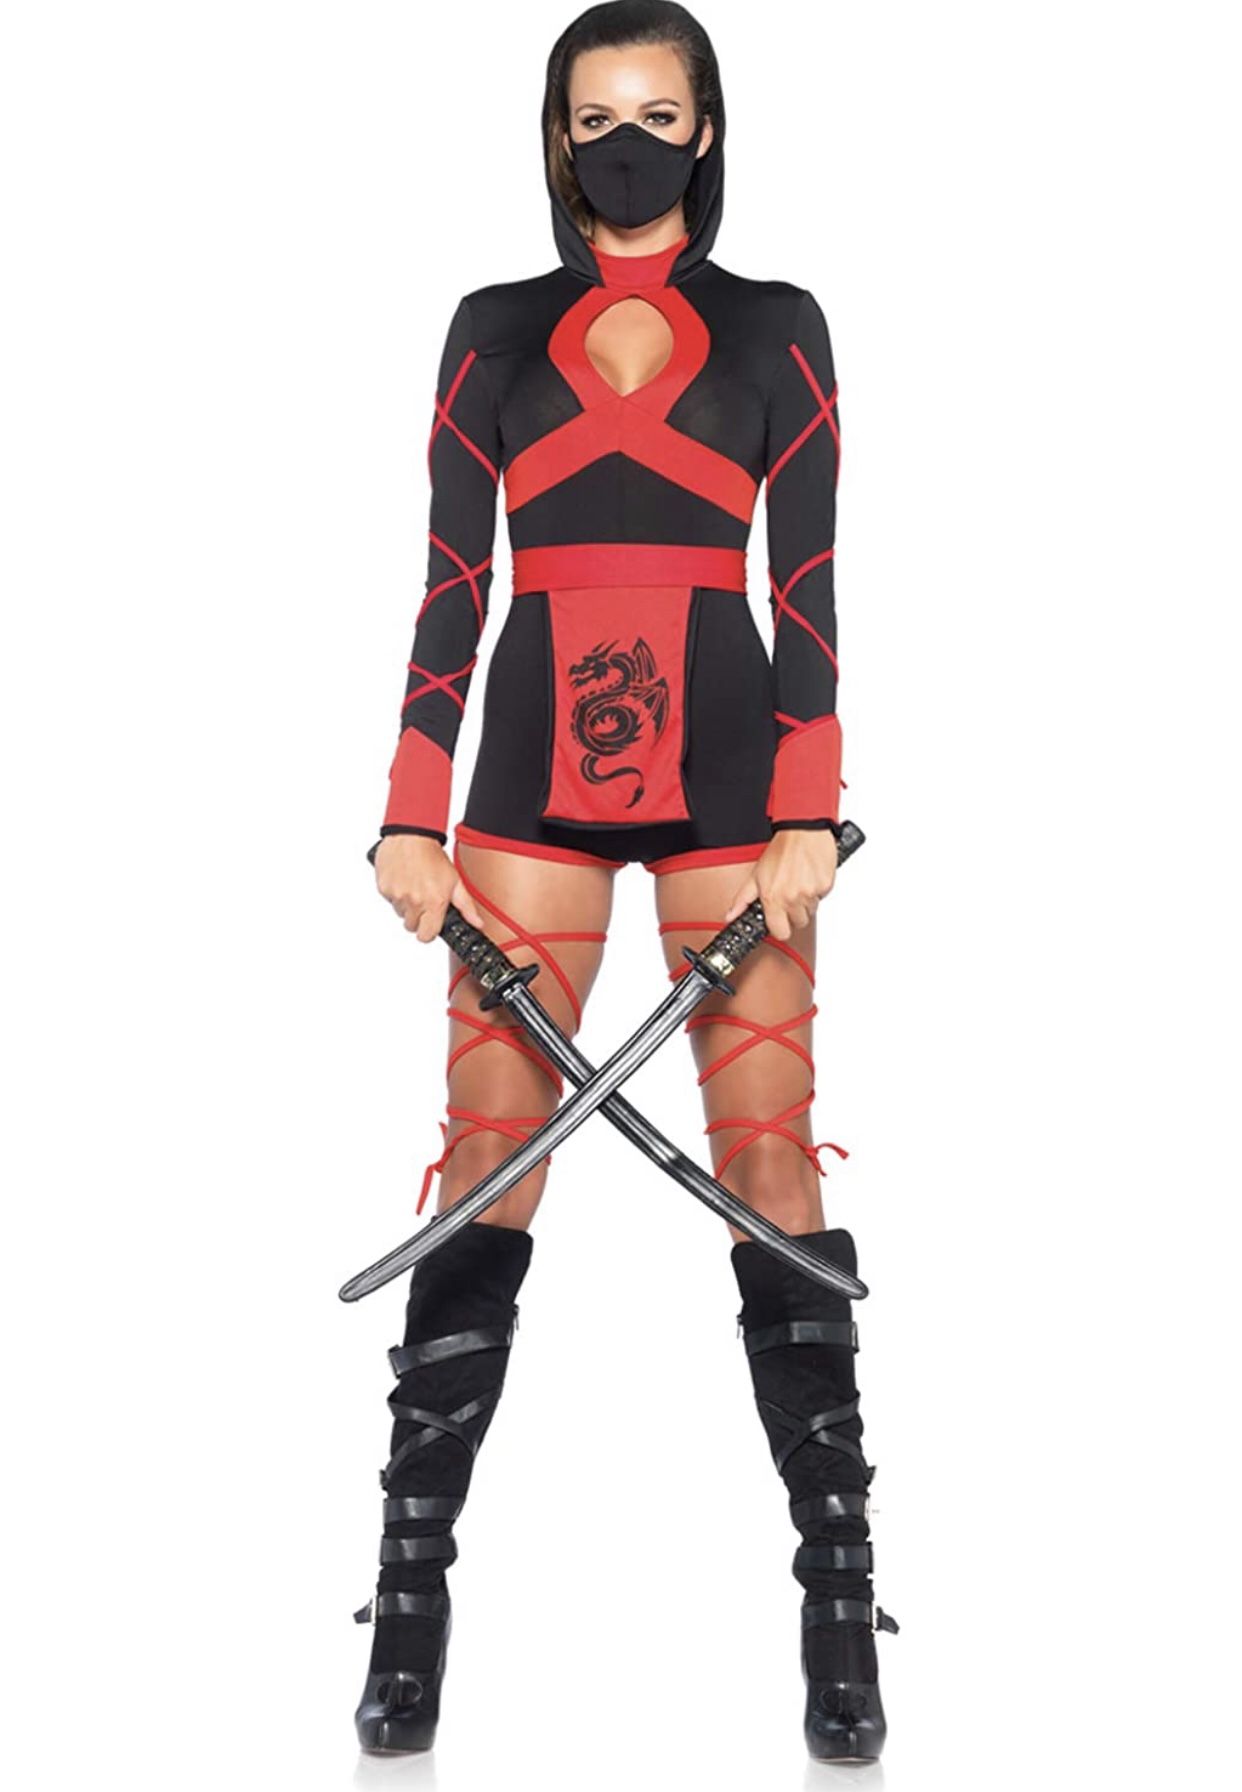 Ninja Women’s Halloween Costume